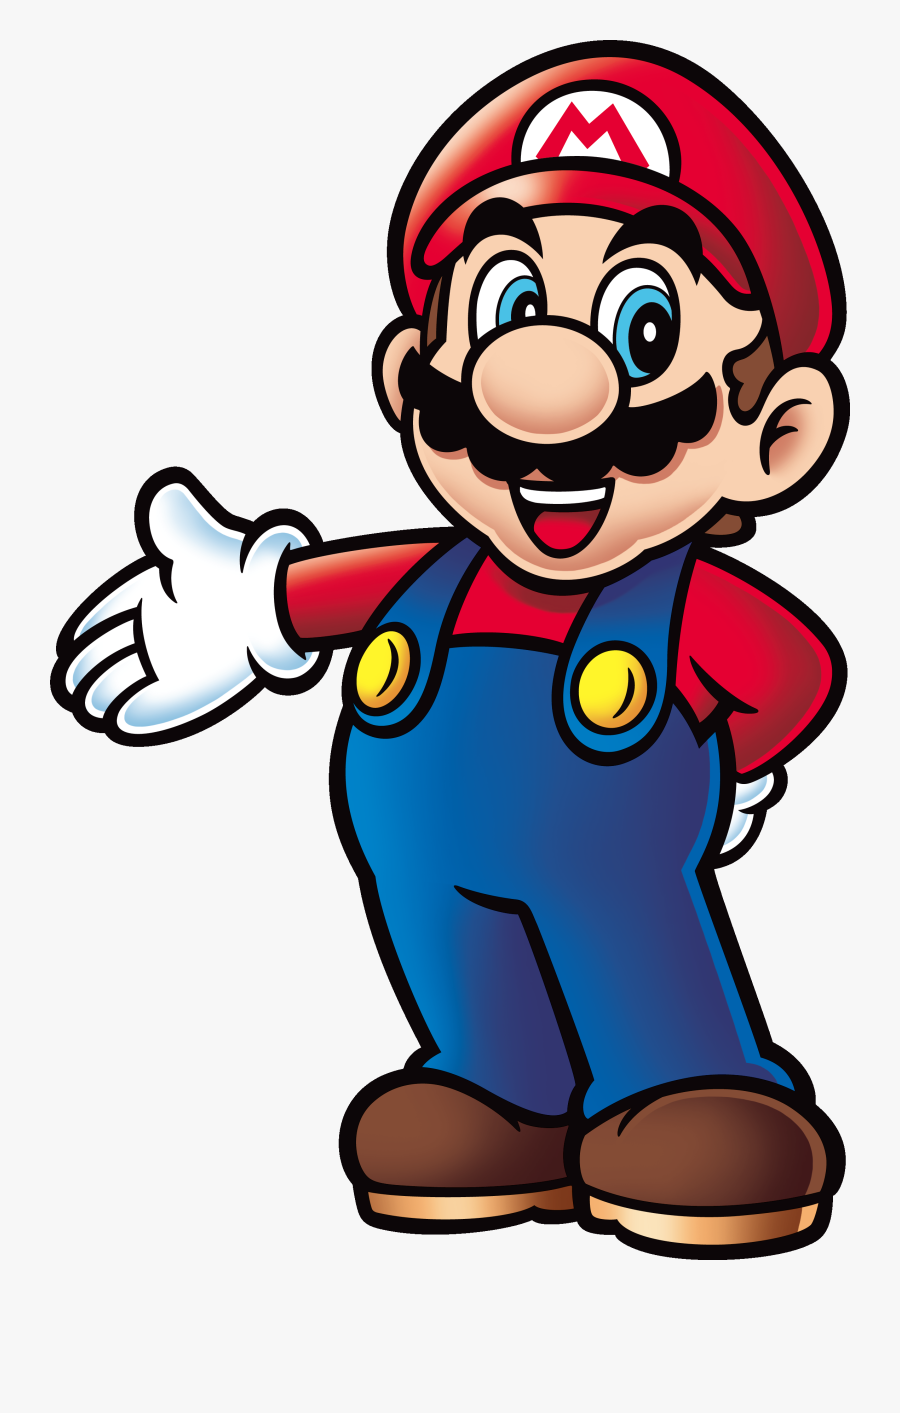 Mario Clipart Png - Mario Cartoon, Transparent Clipart